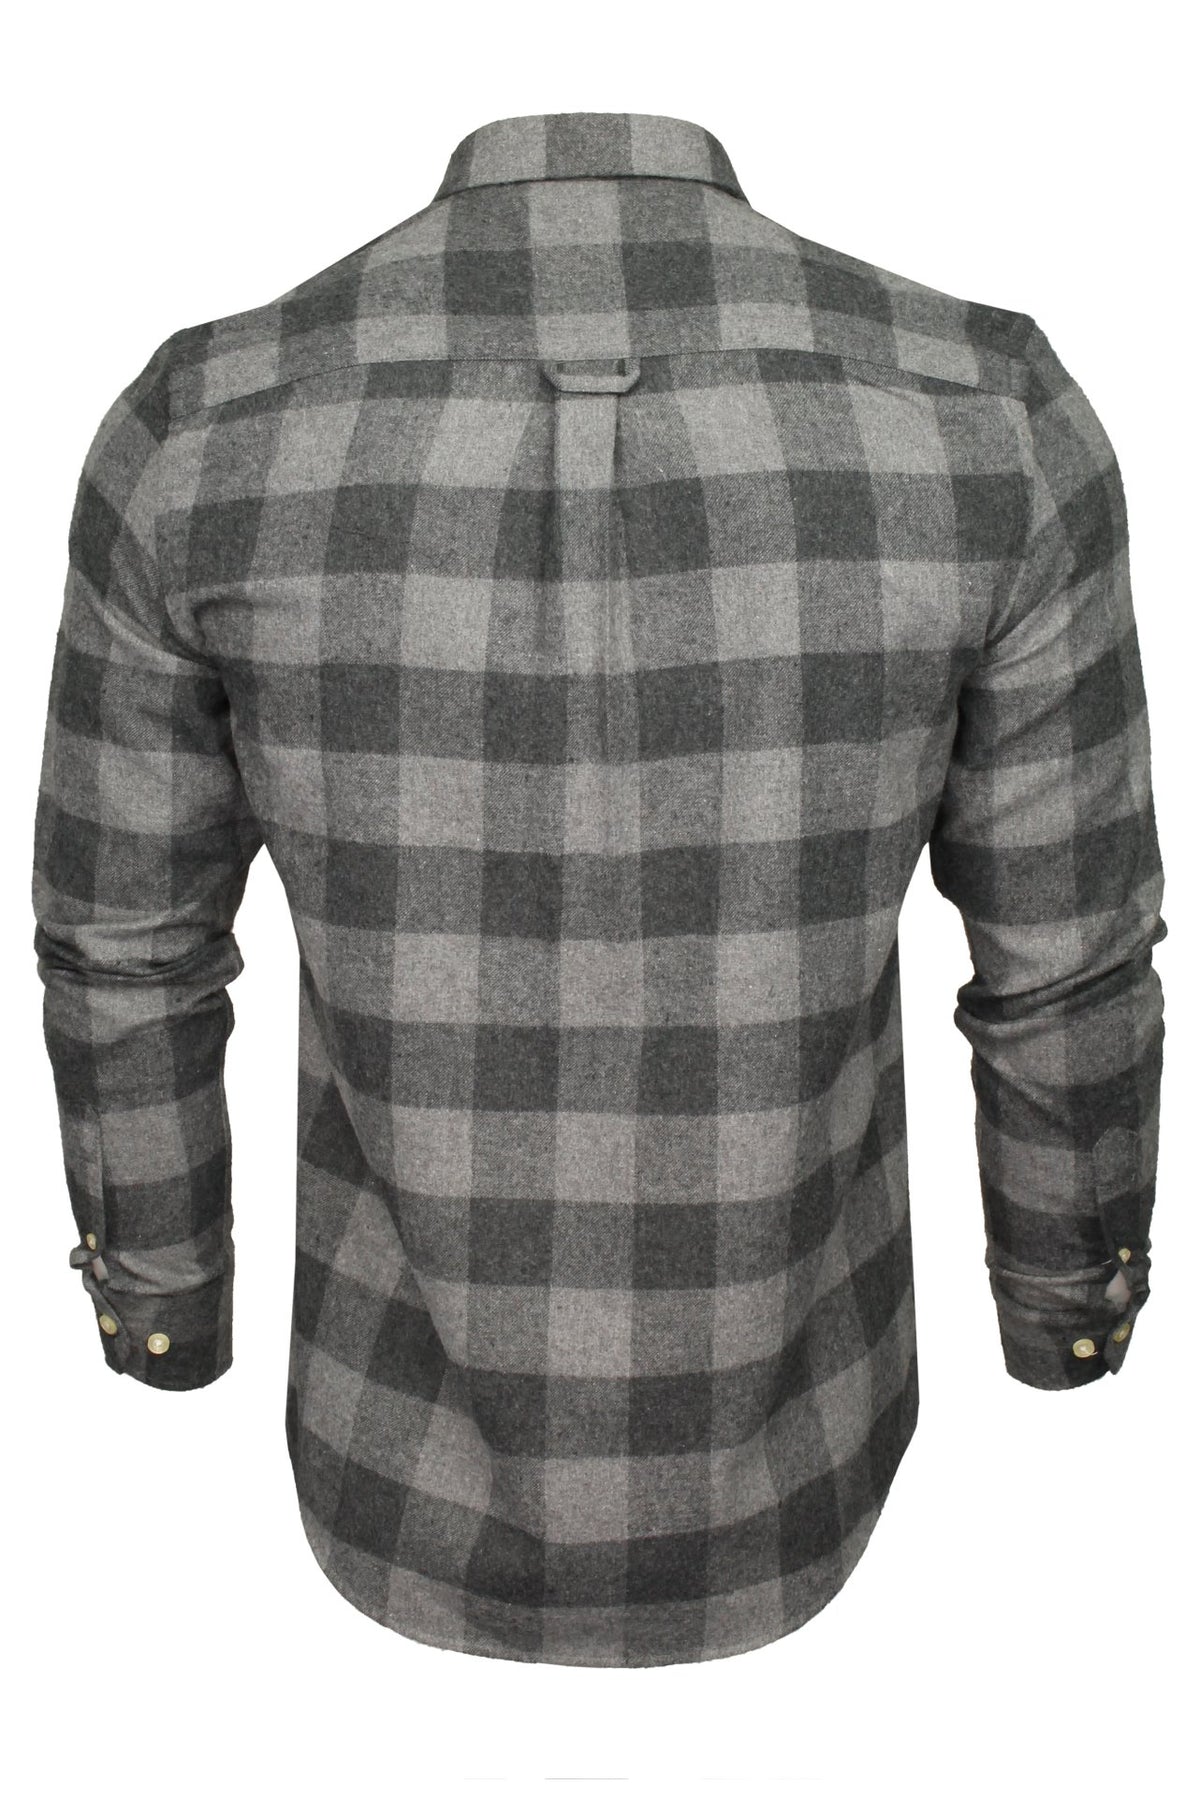 Xact Mens Soft Flannel Buffalo Check Shirt - Long Sleeved, 03, Xsh1136, Jack - Grey Melange/ Dark Grey